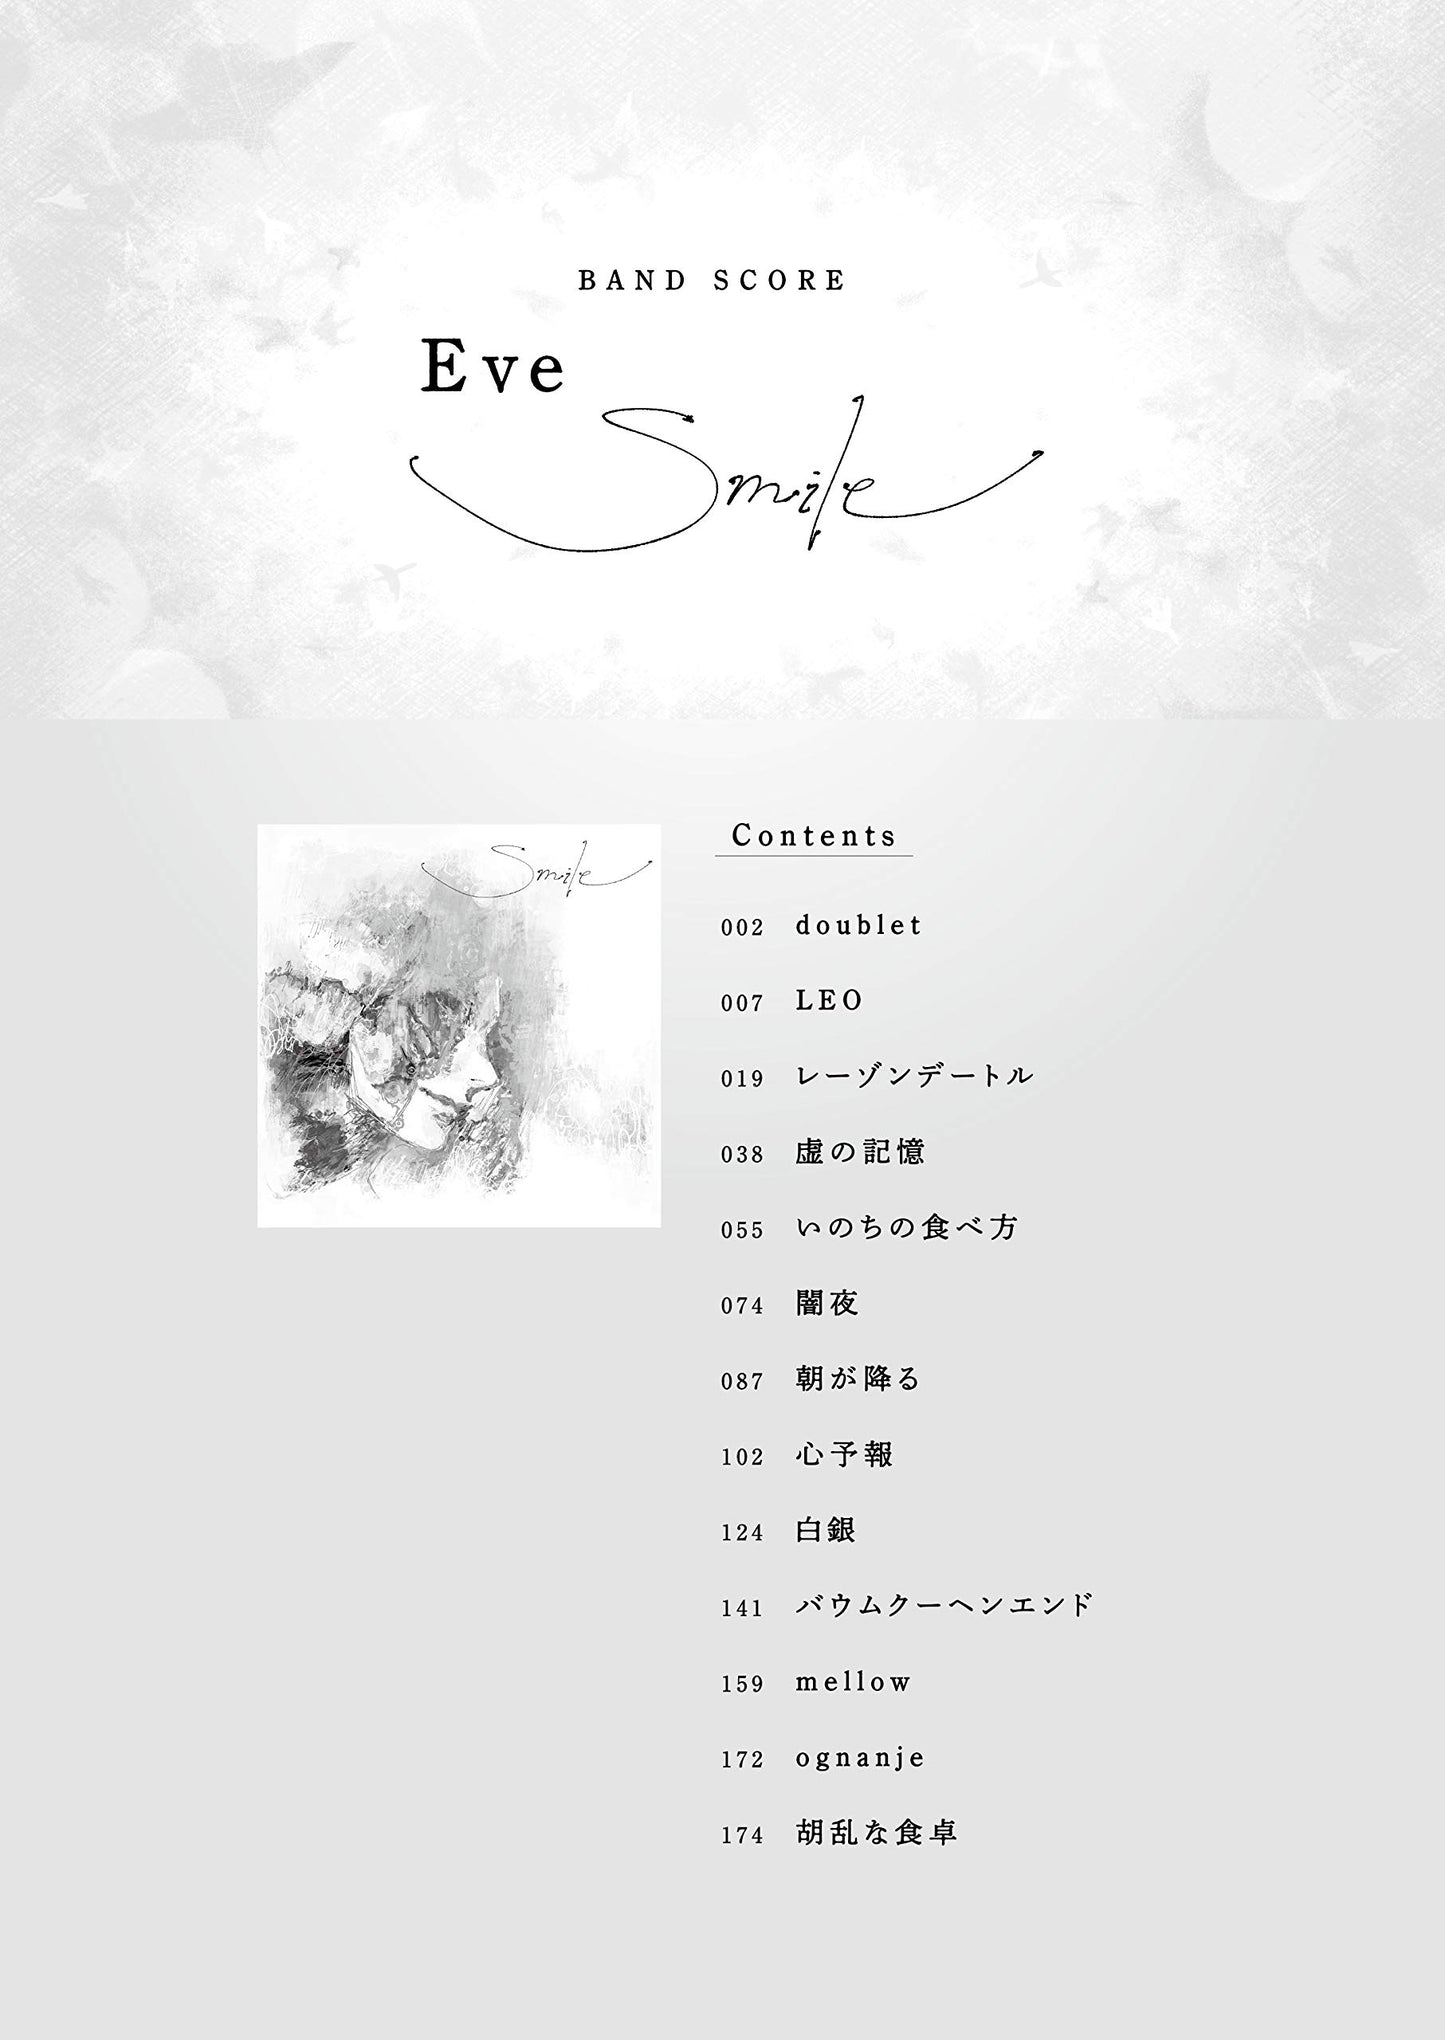 Eve "Smile" Band Score TAB Sheet Music Book